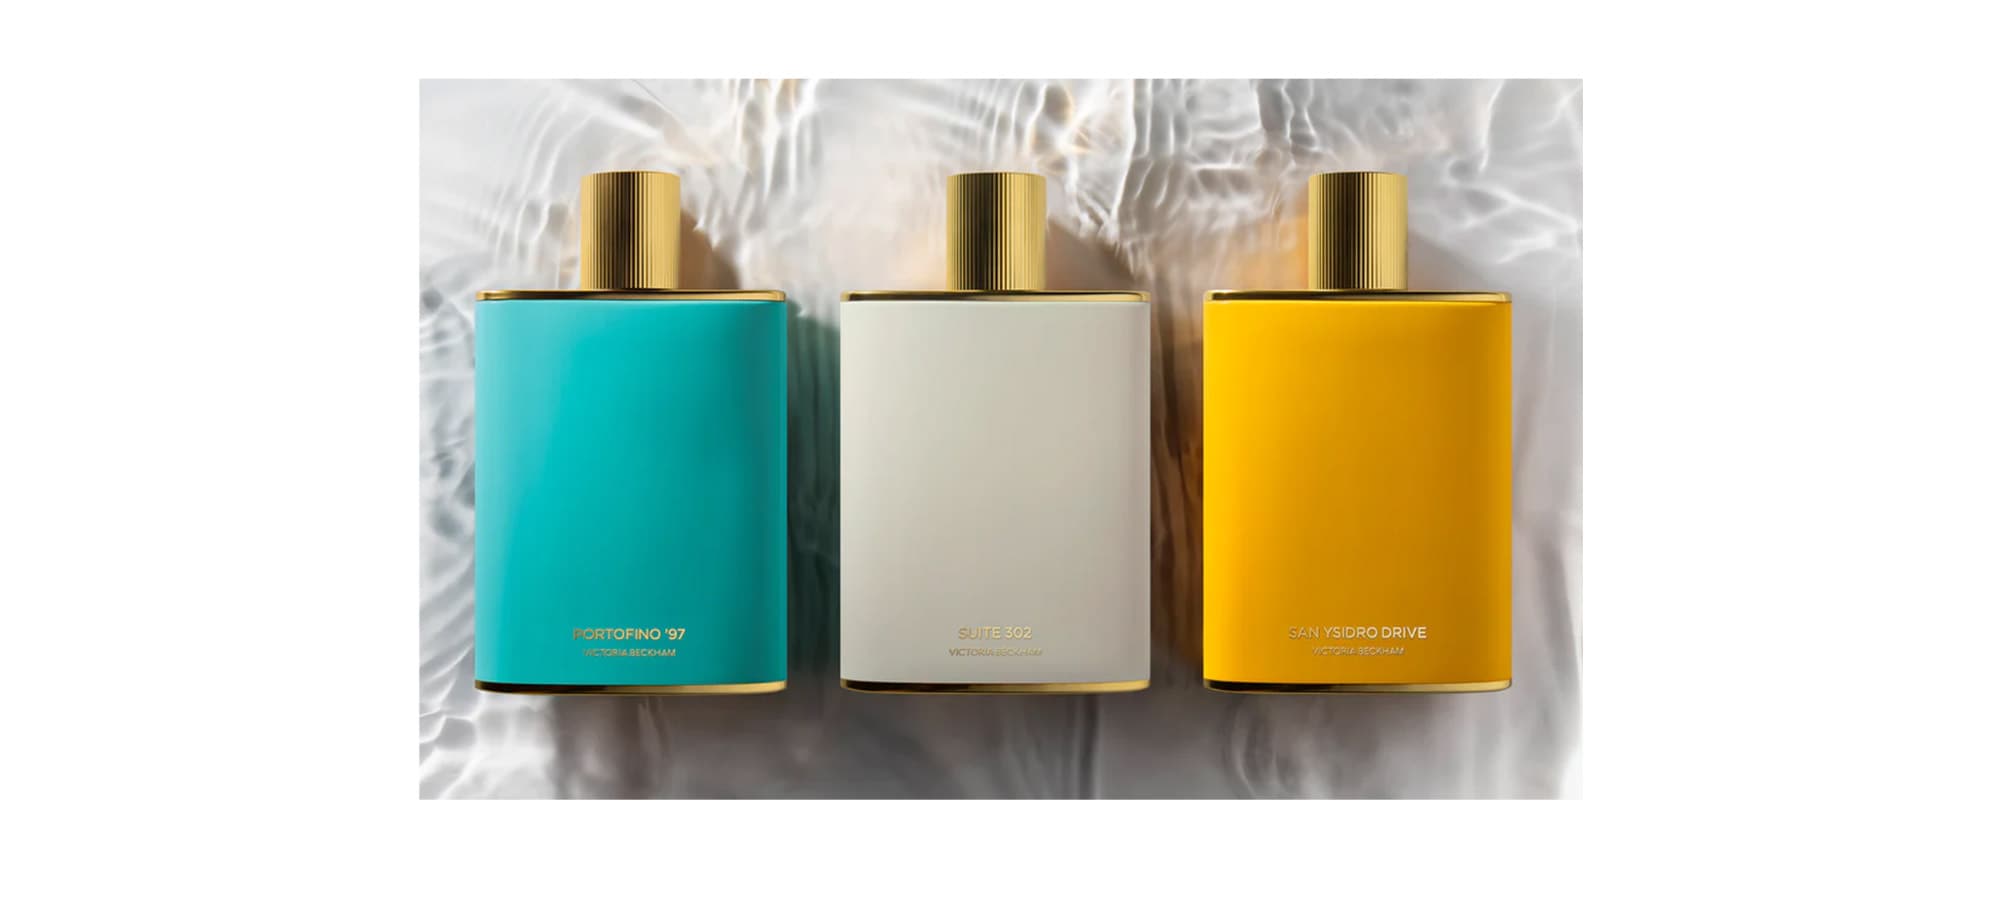 Fragrance bottles of Portofino 97, Suite 302, and San Ysidro Drive.